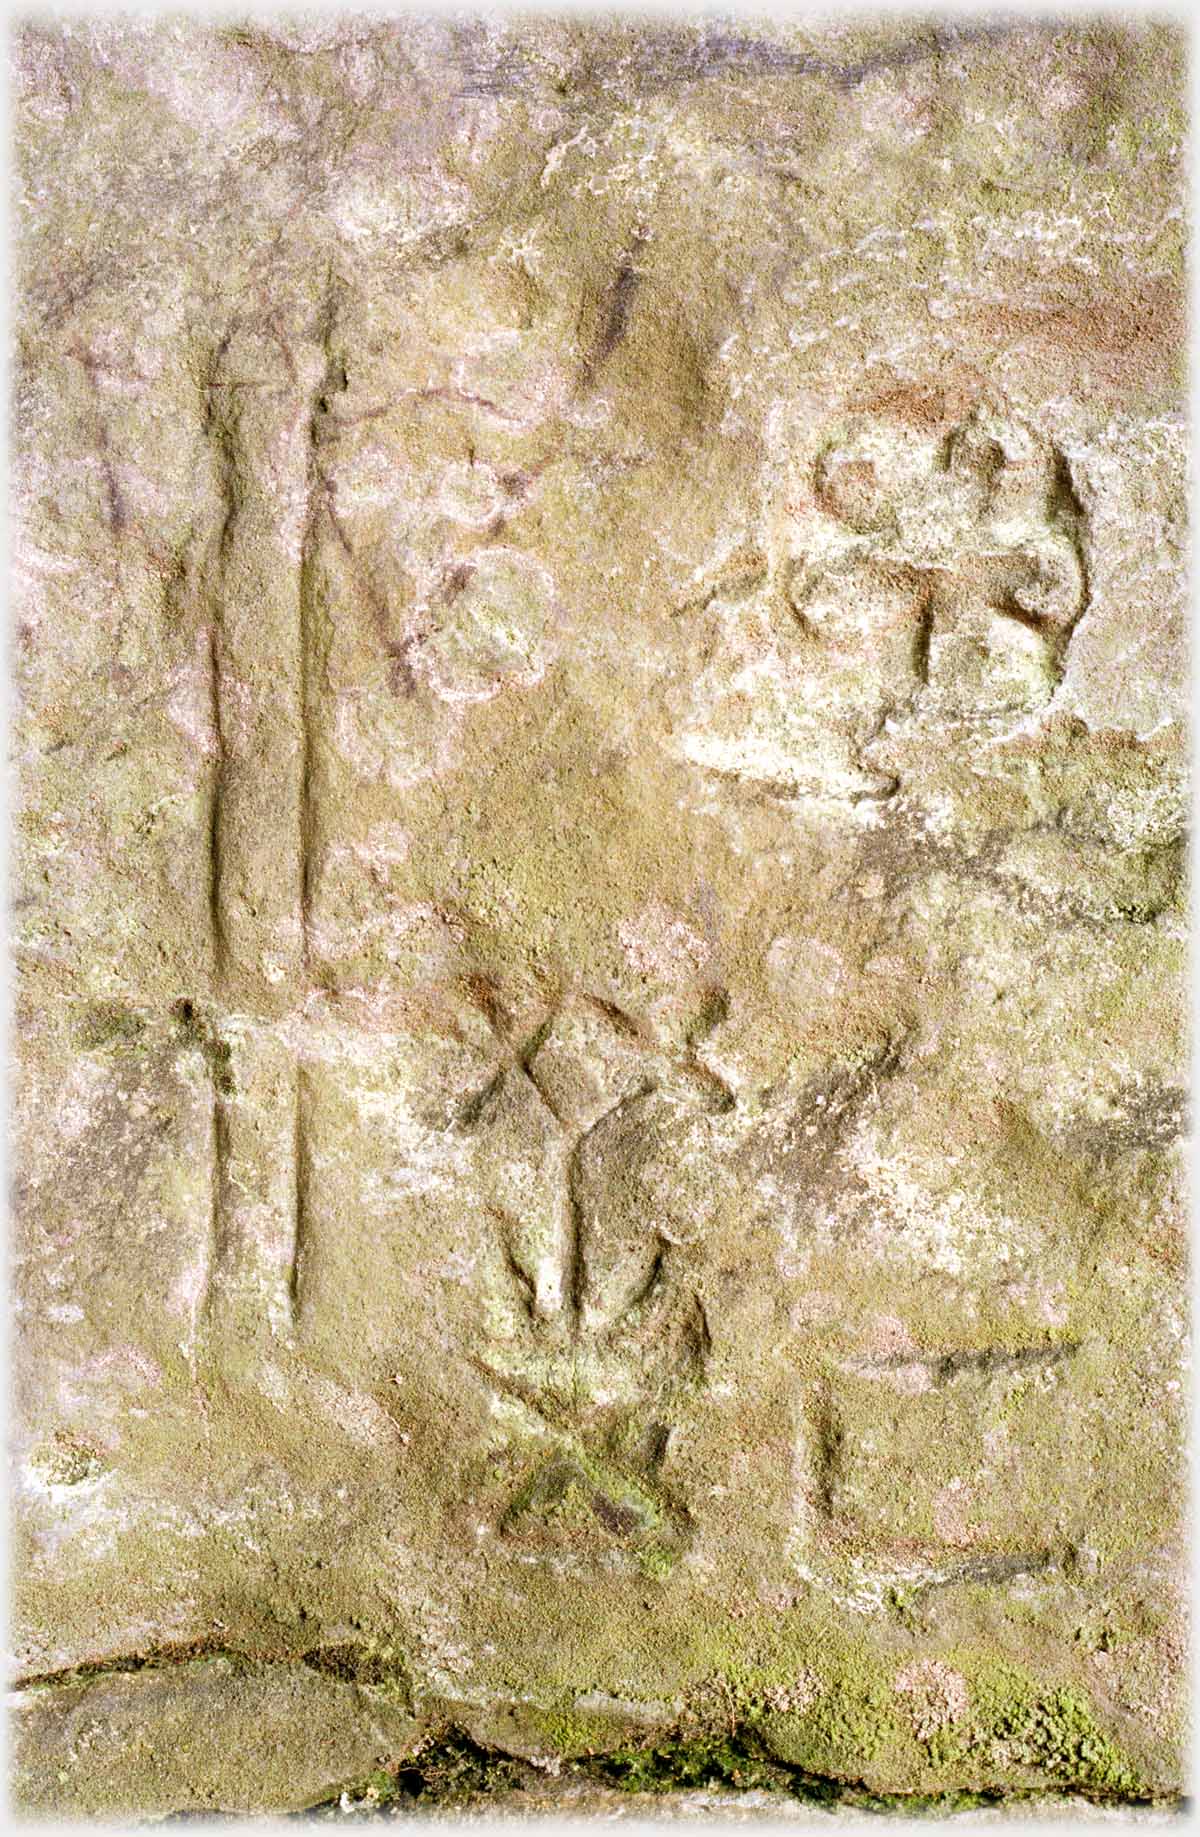 Carvings on stone including Greek crosses.